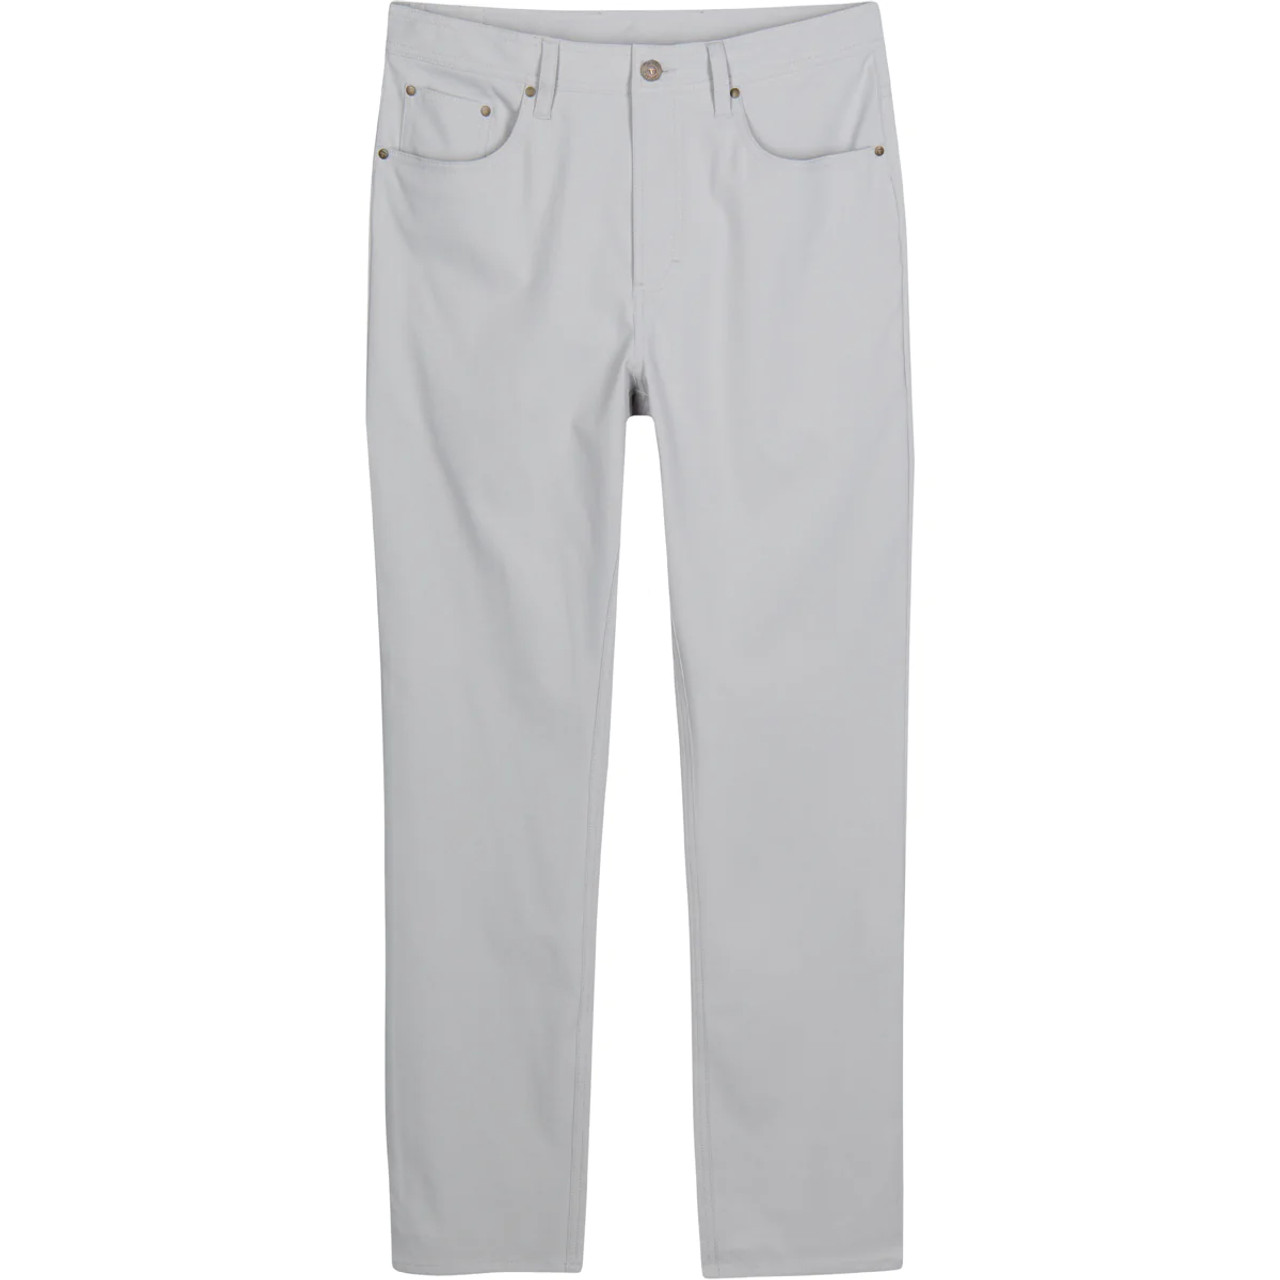 Genteal Clubhouse Stretch 5-Pocket Pant: Graphite - Craig Reagin Clothiers